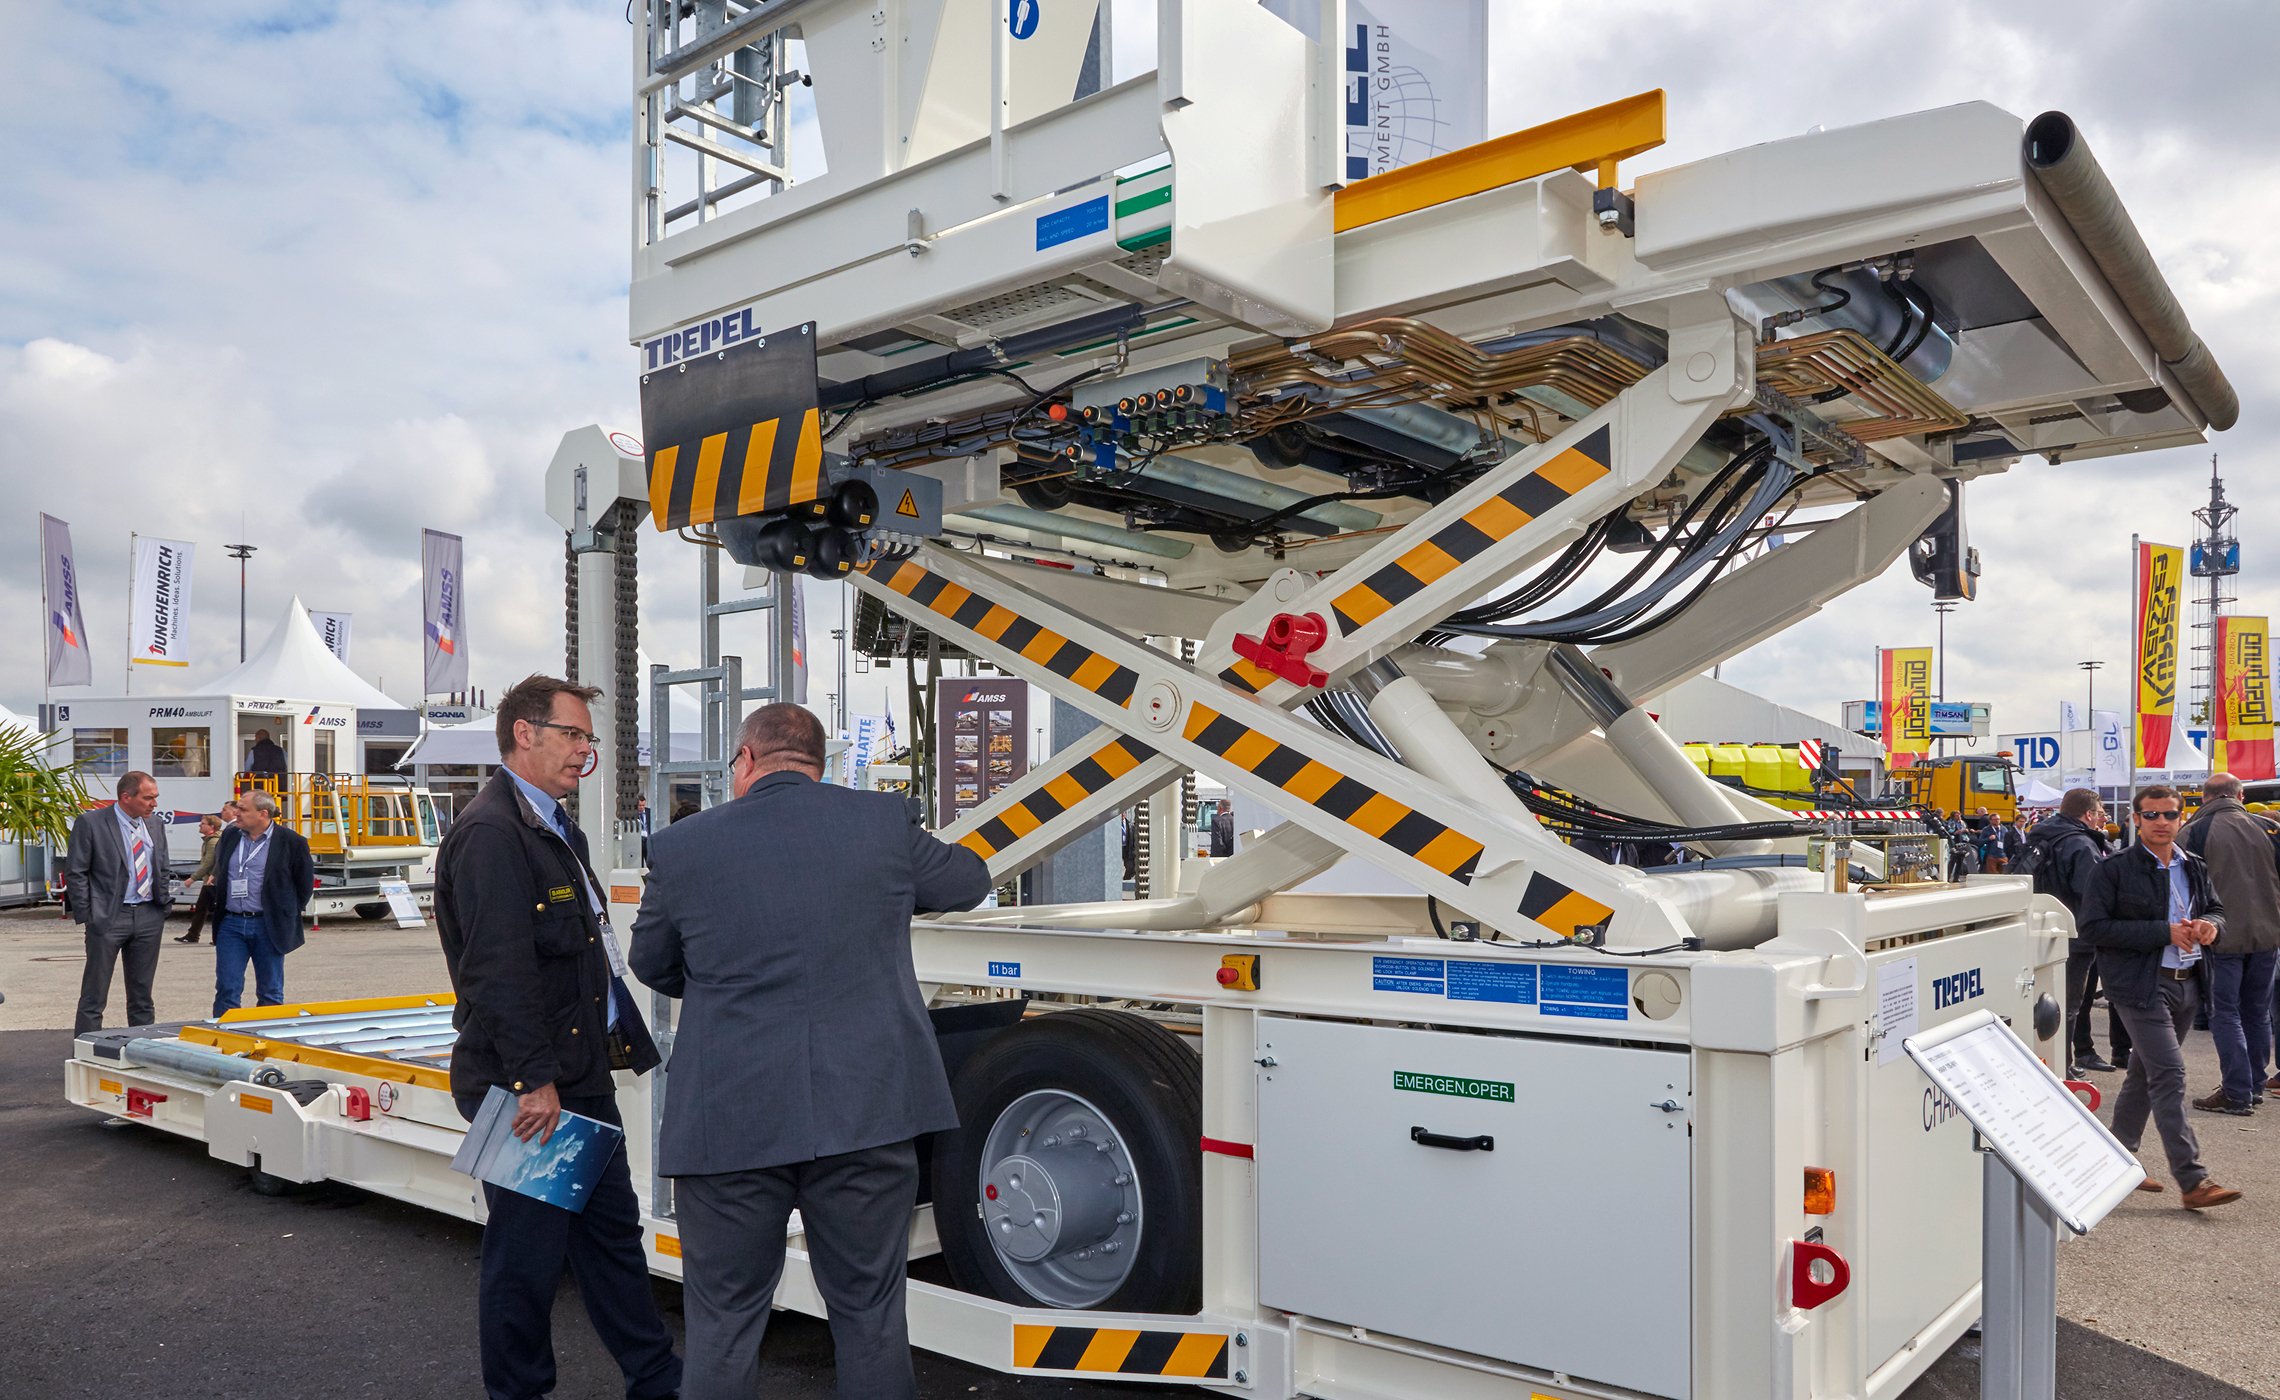 TREPEL Airport Equipment - Inter Airport Europe 2015